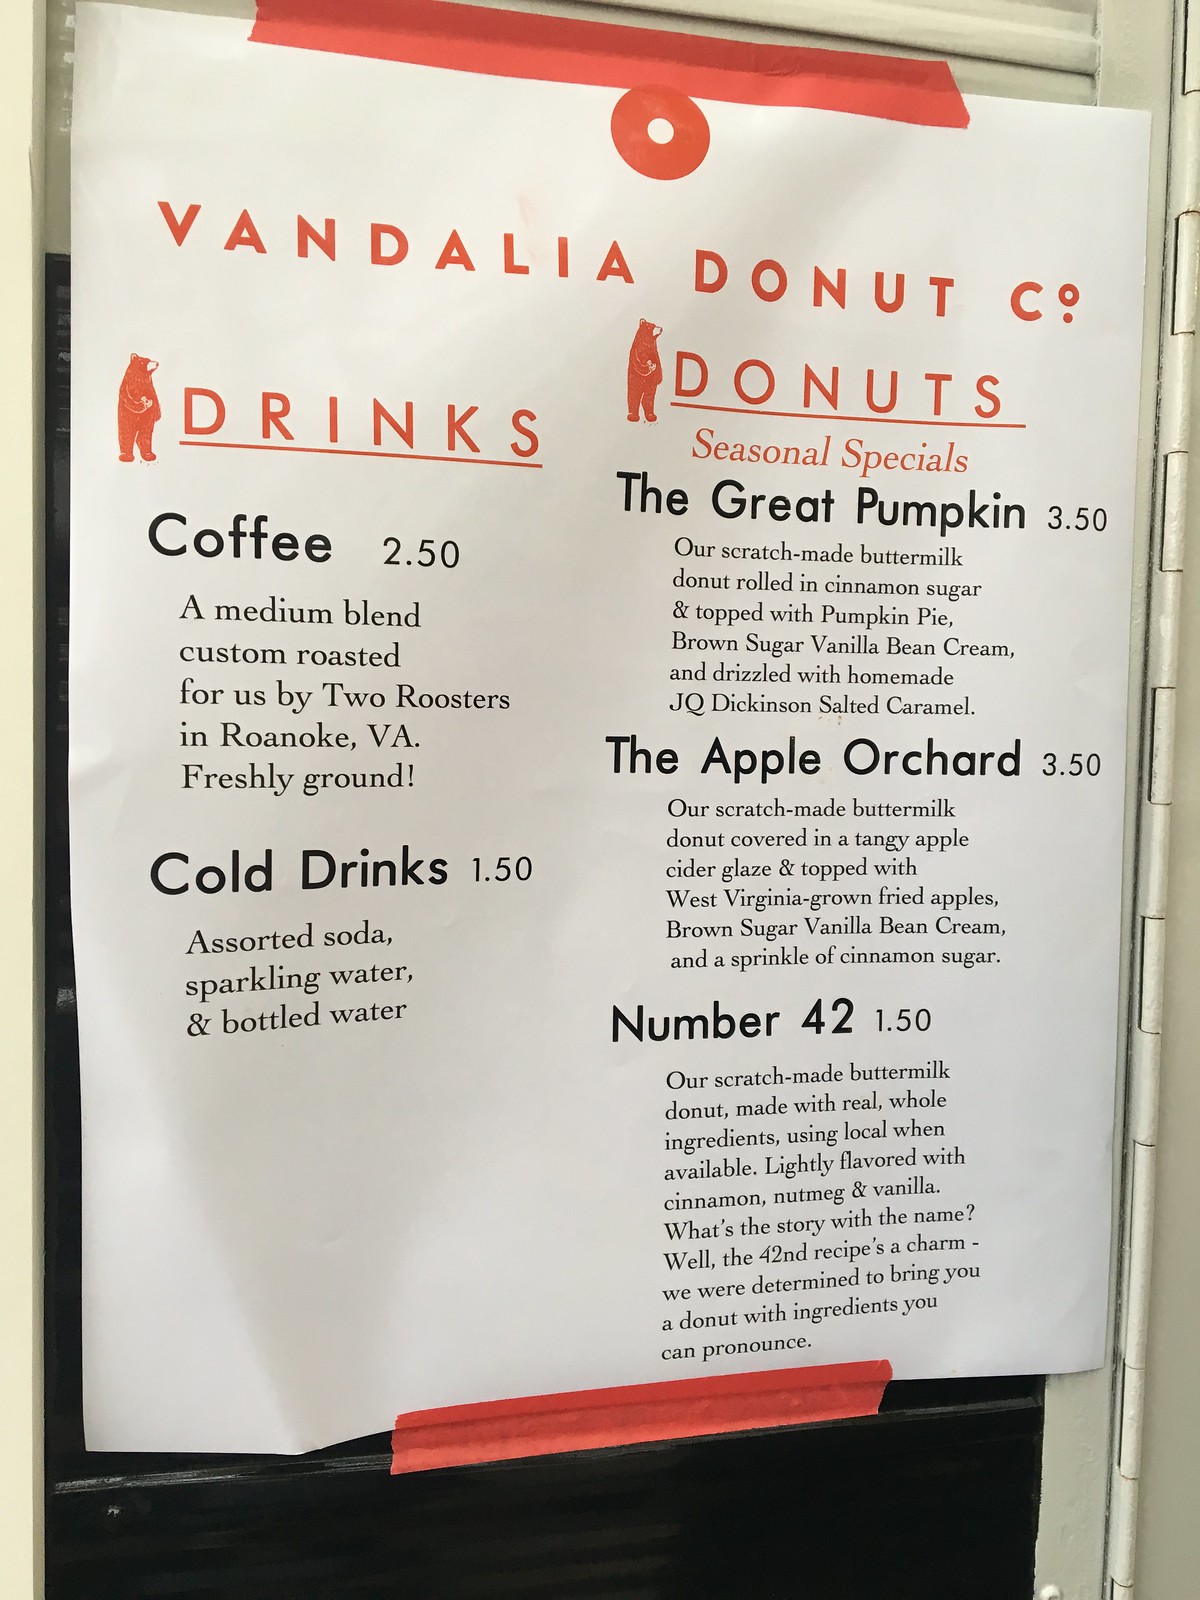 Vandalia Donut Co